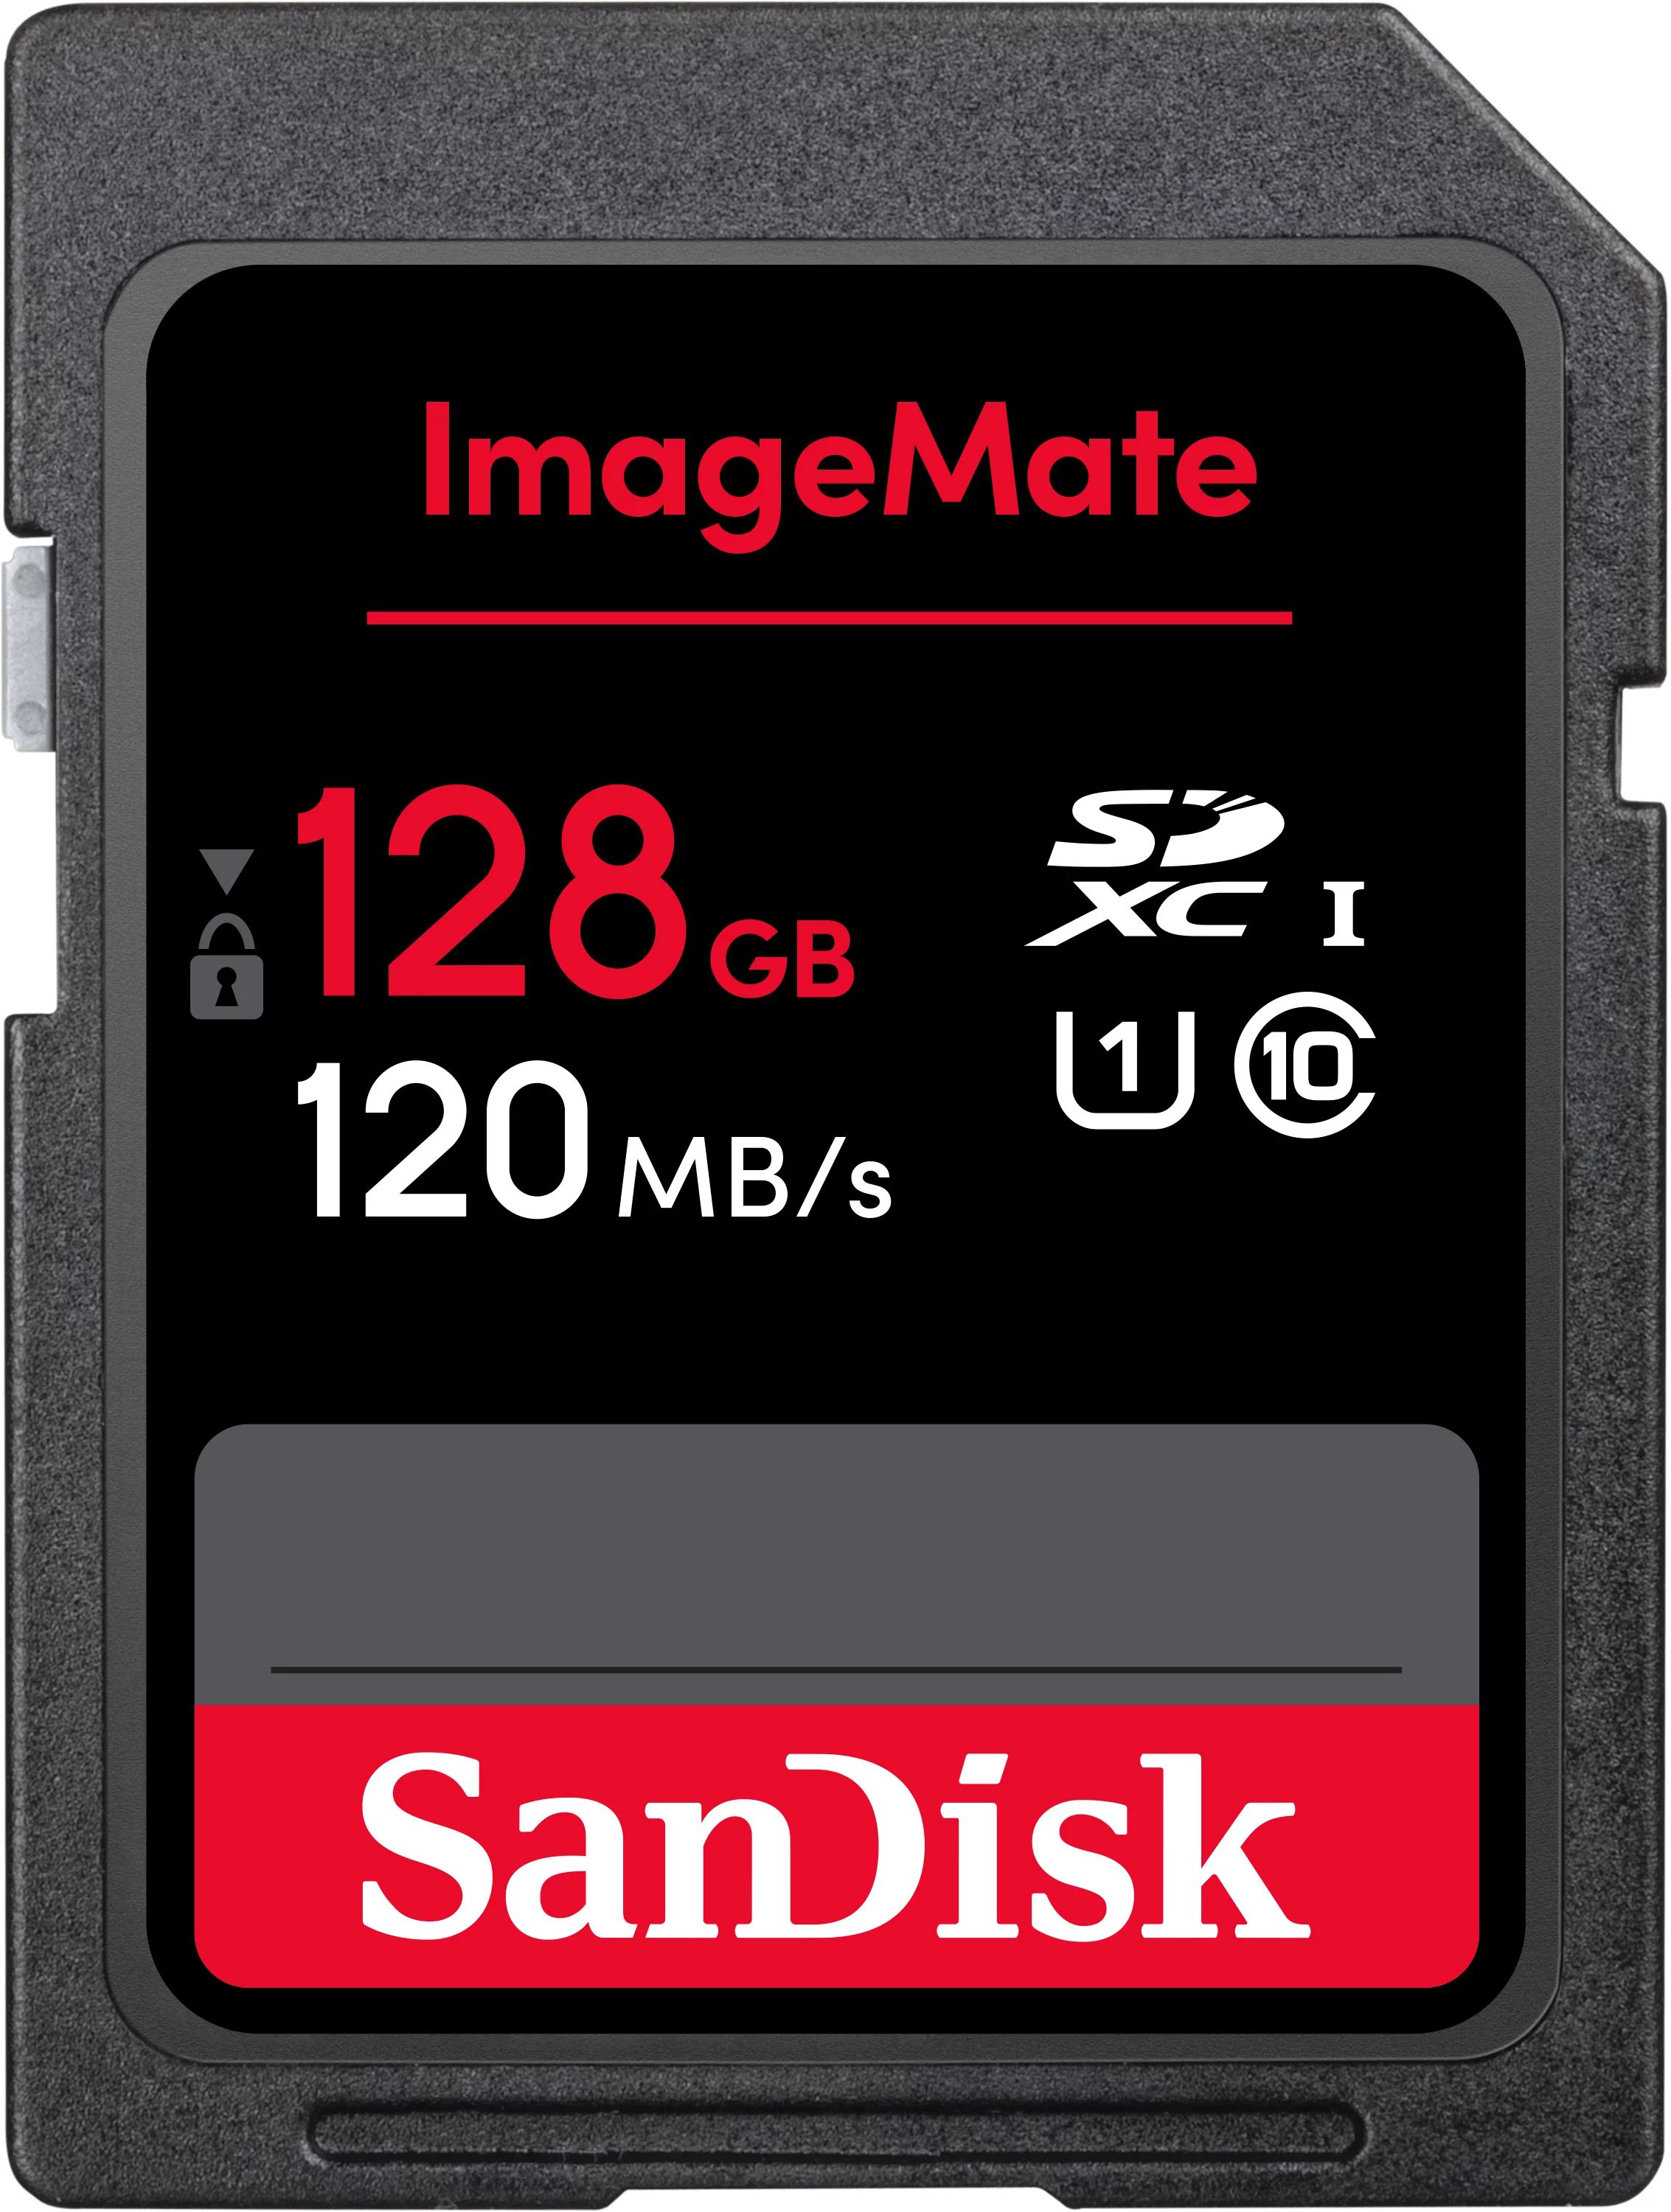 SanDisk 128GB ImageMate SDXC UHS 1 Memory Card SDSDUN4-128G-Aw6kn - Walmart.com | Walmart (US)